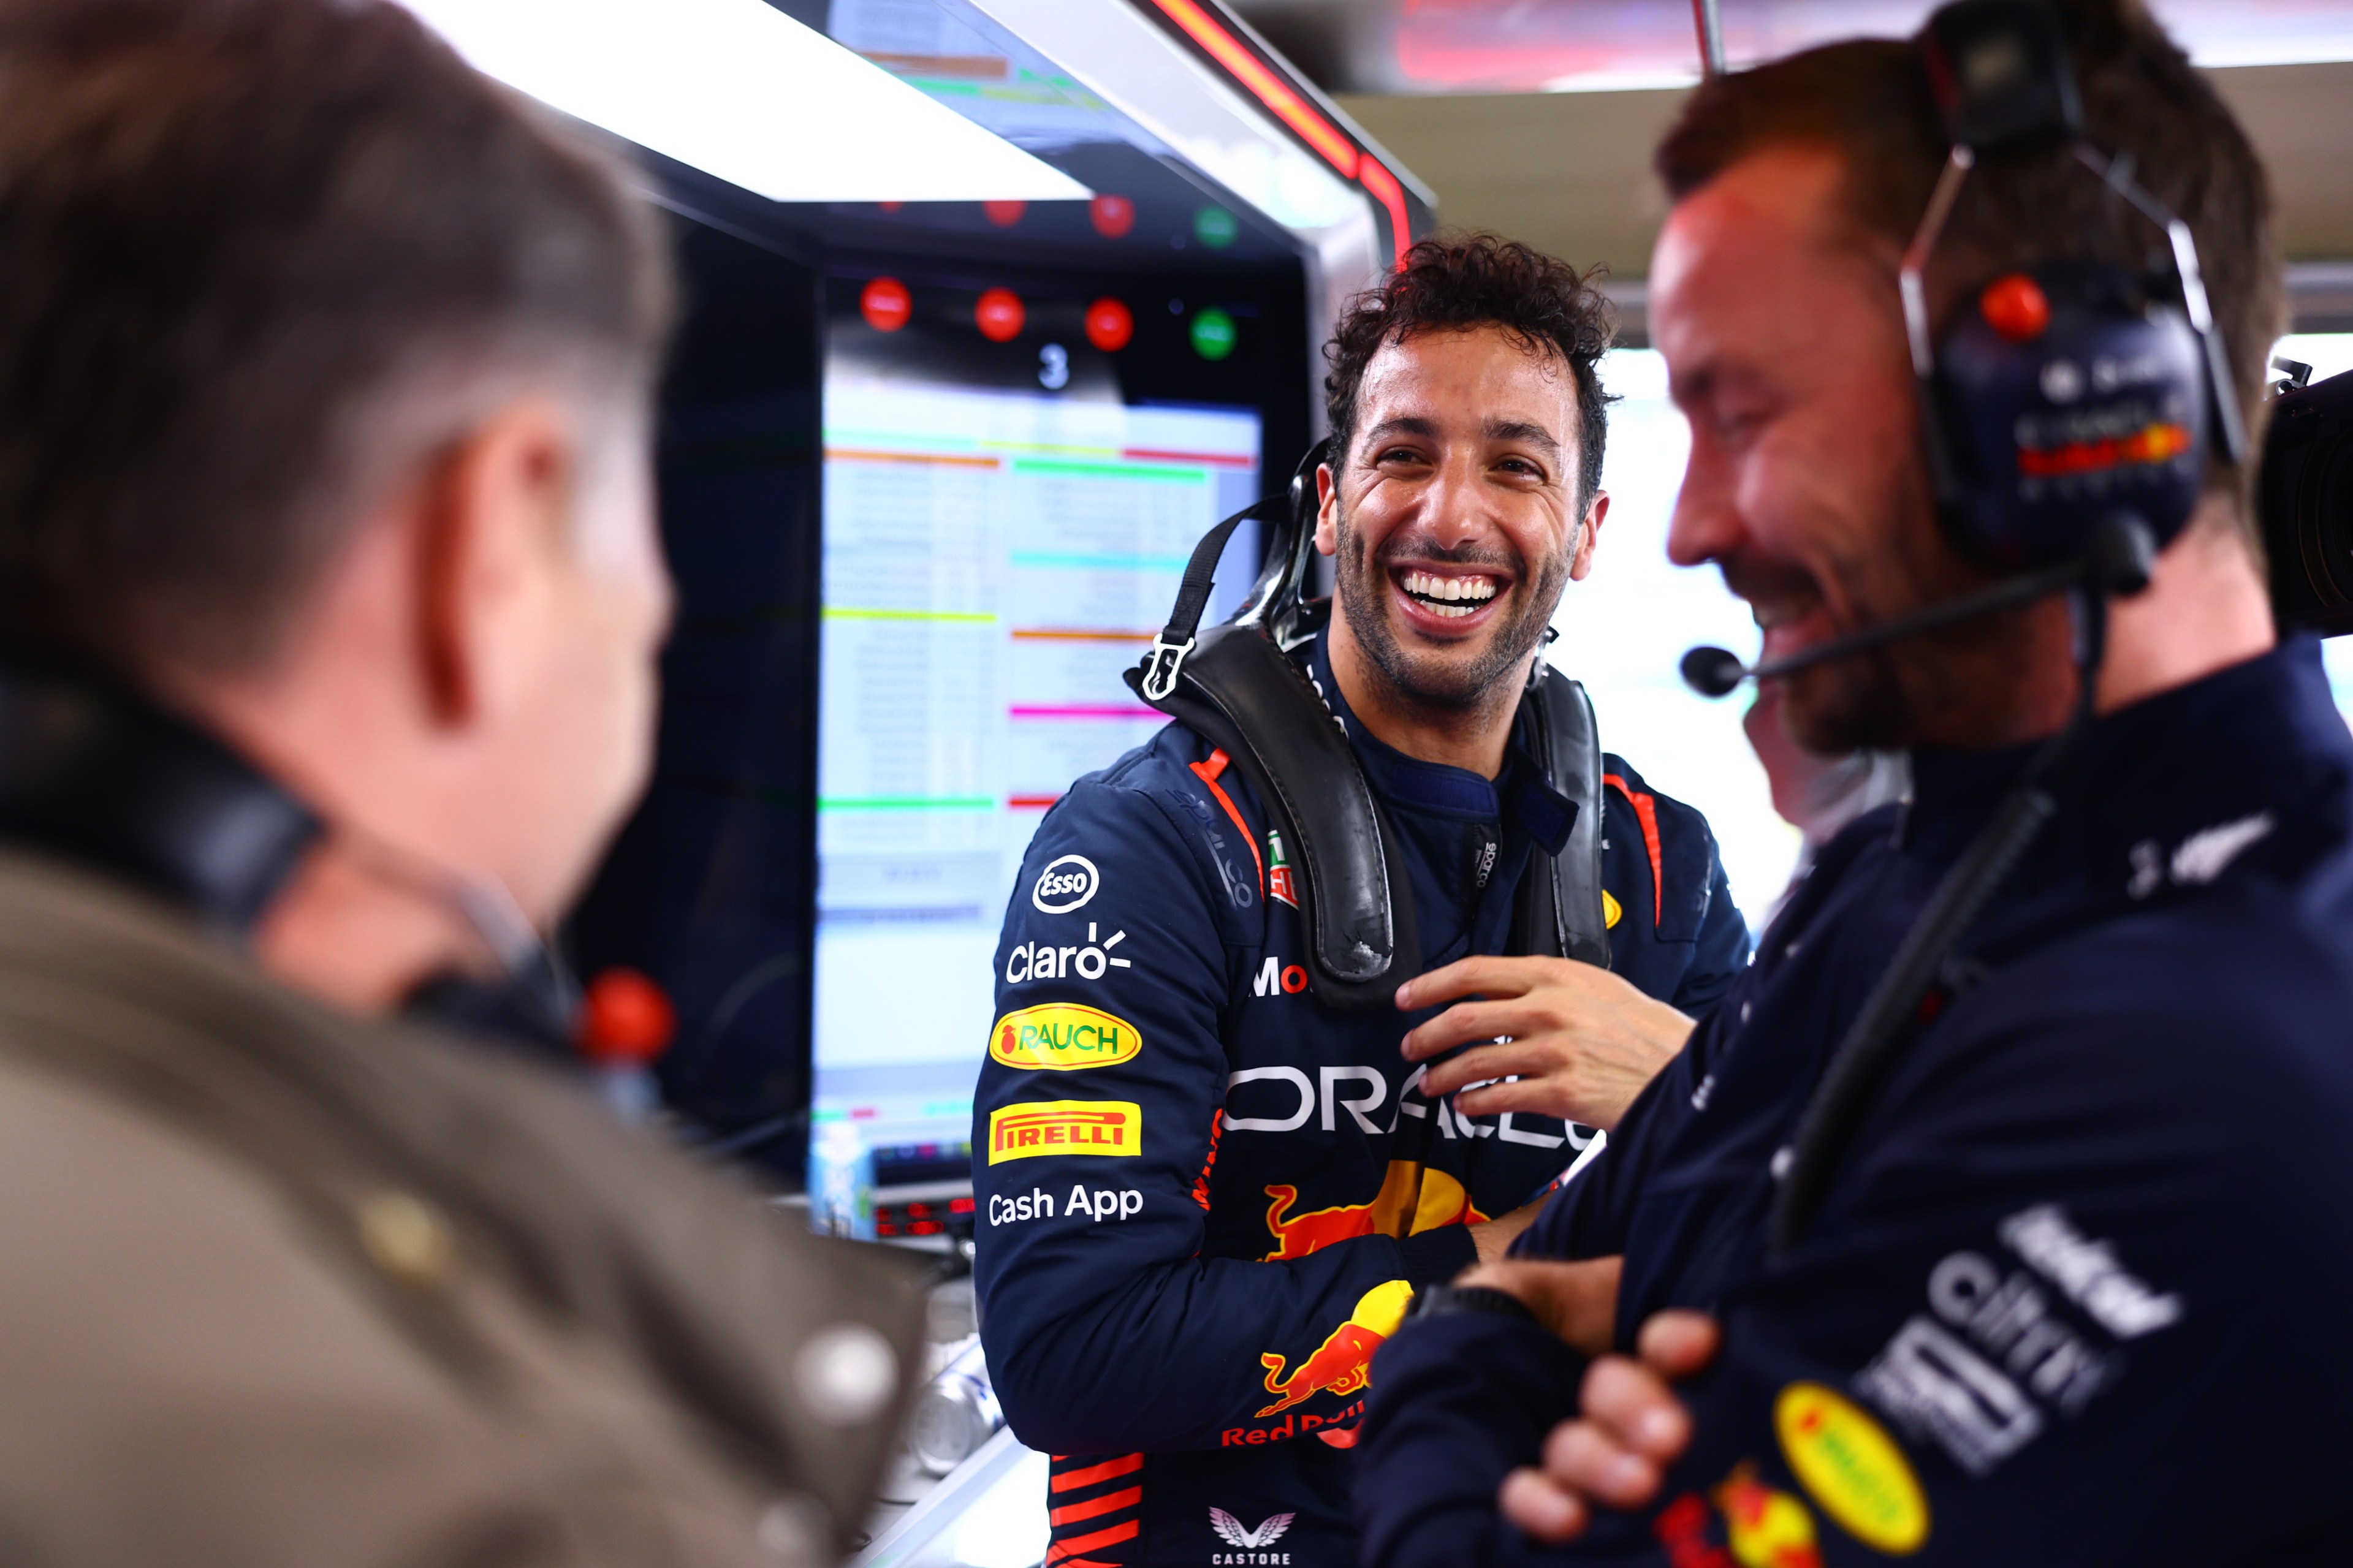 Daniel Ricciardo smiles in his Red Bull uniform.